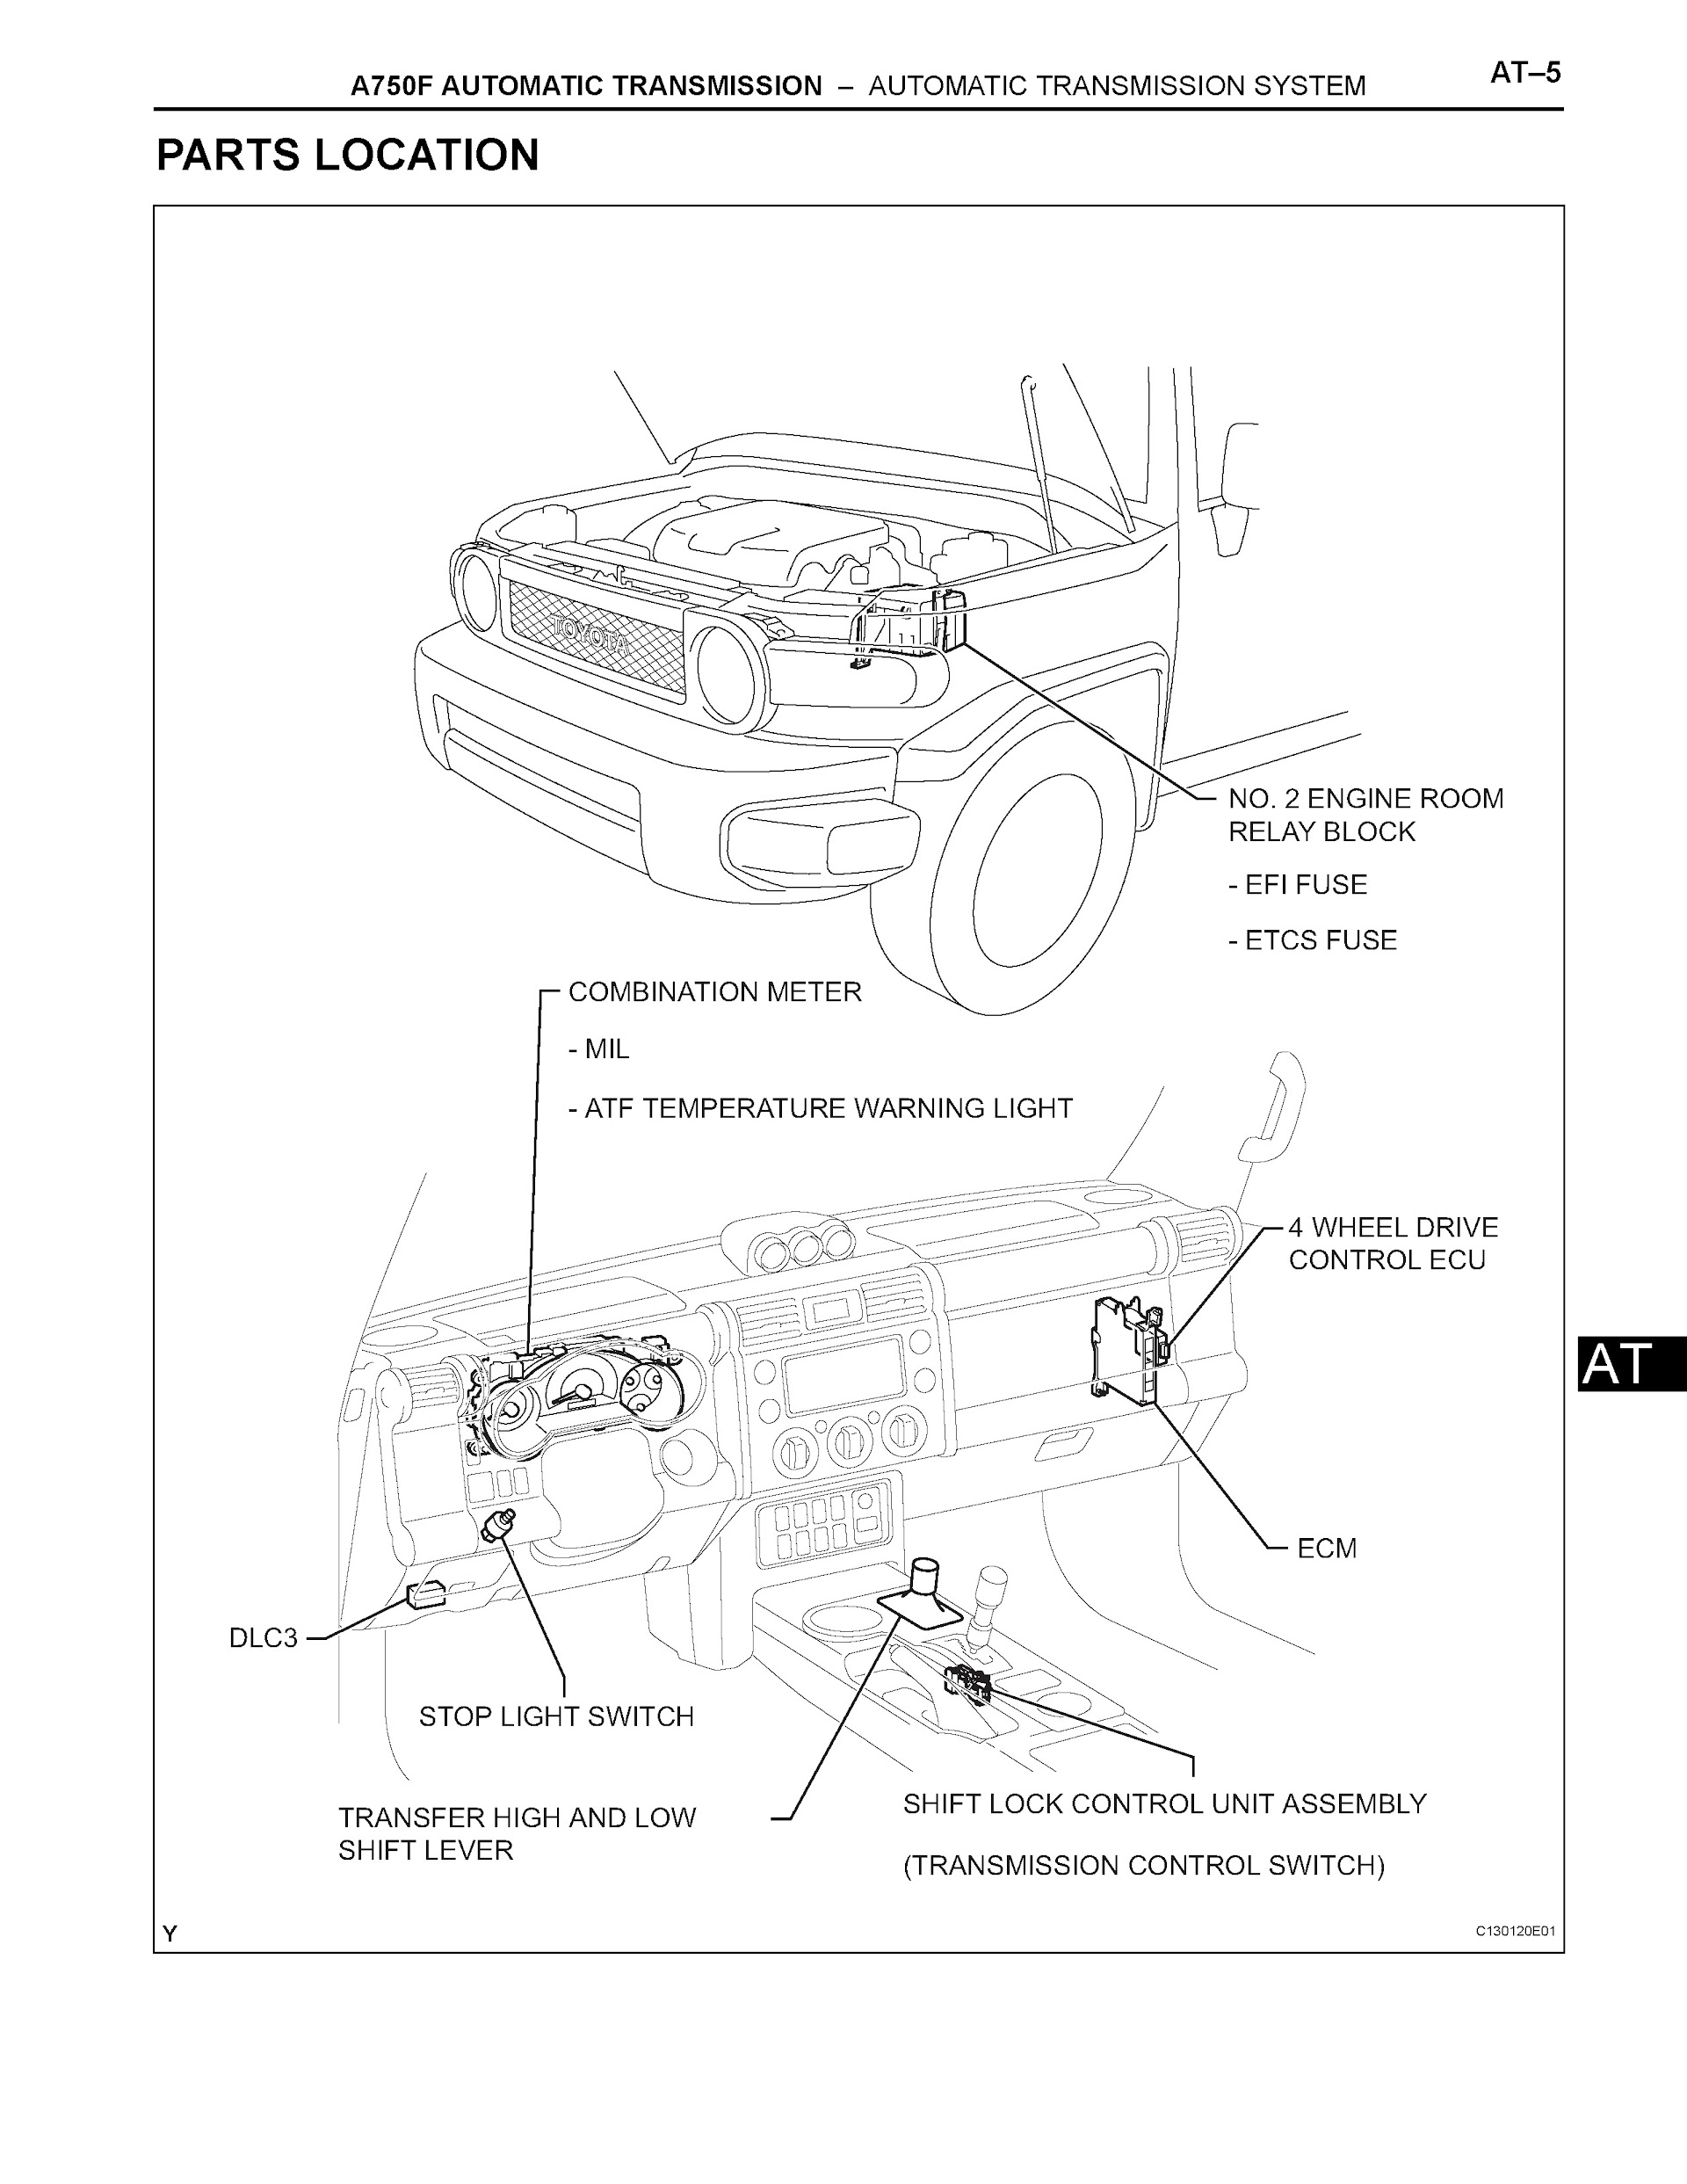 Toyota FJ Cruiser Repair Manual, A750F Automatic Transmission